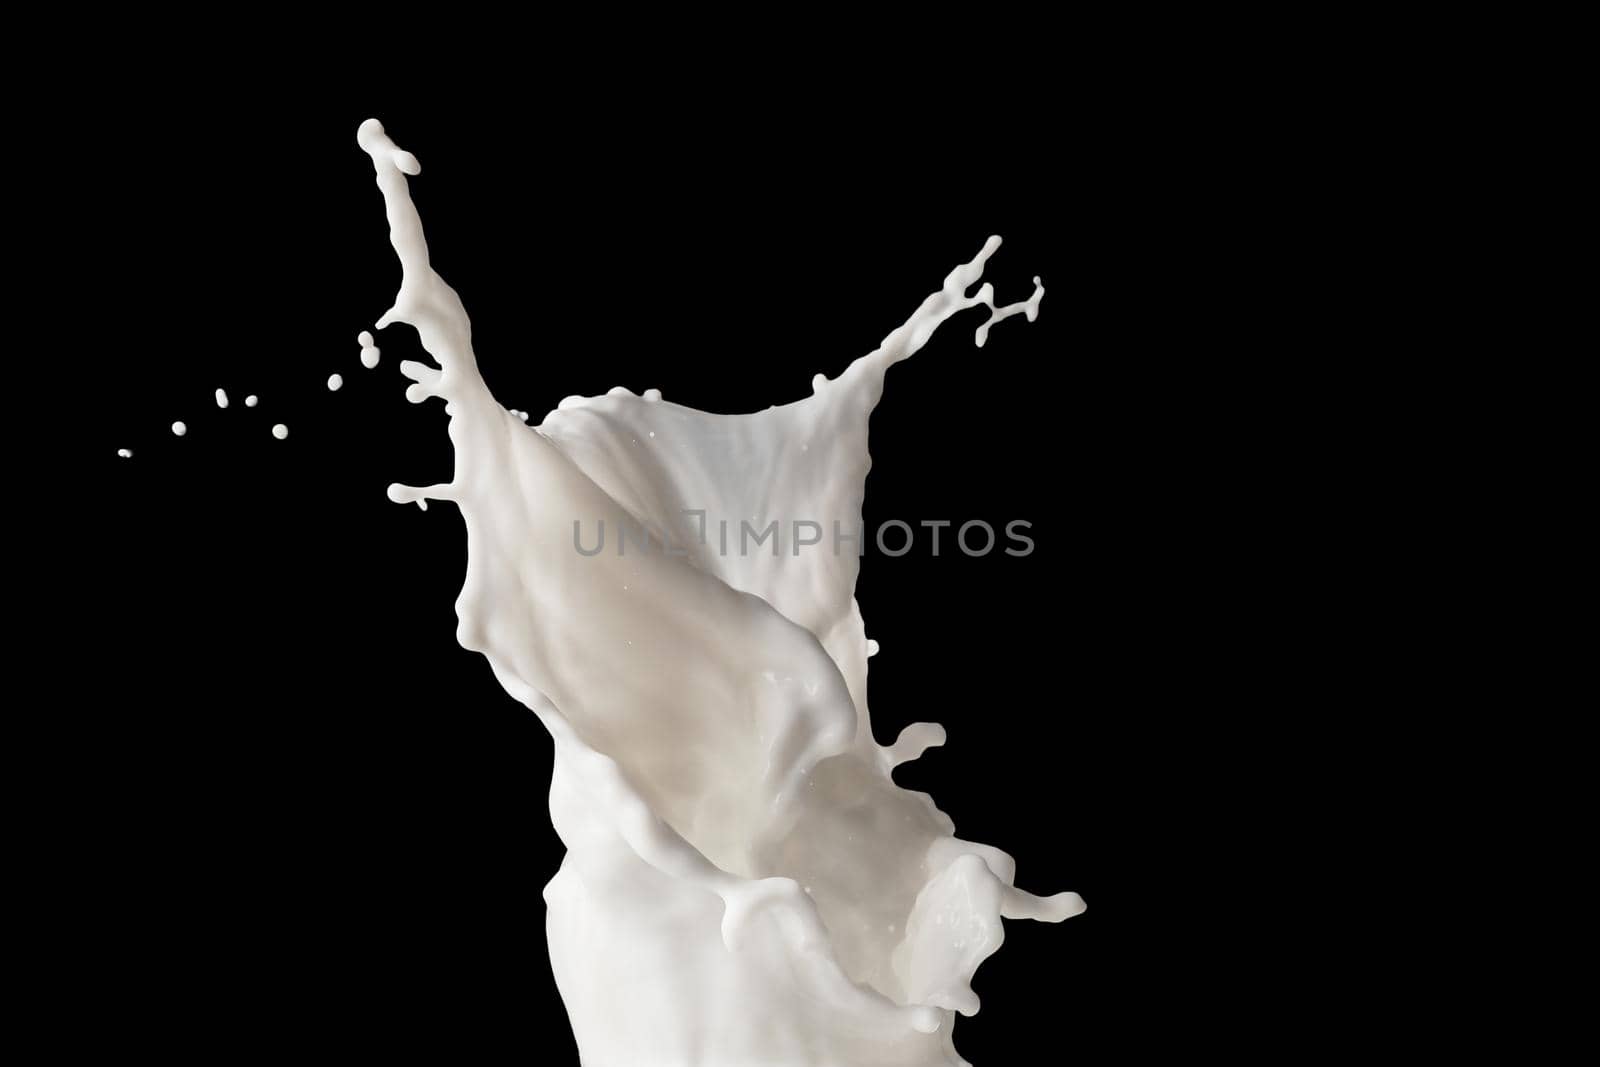 Milk splash on black by Wasant